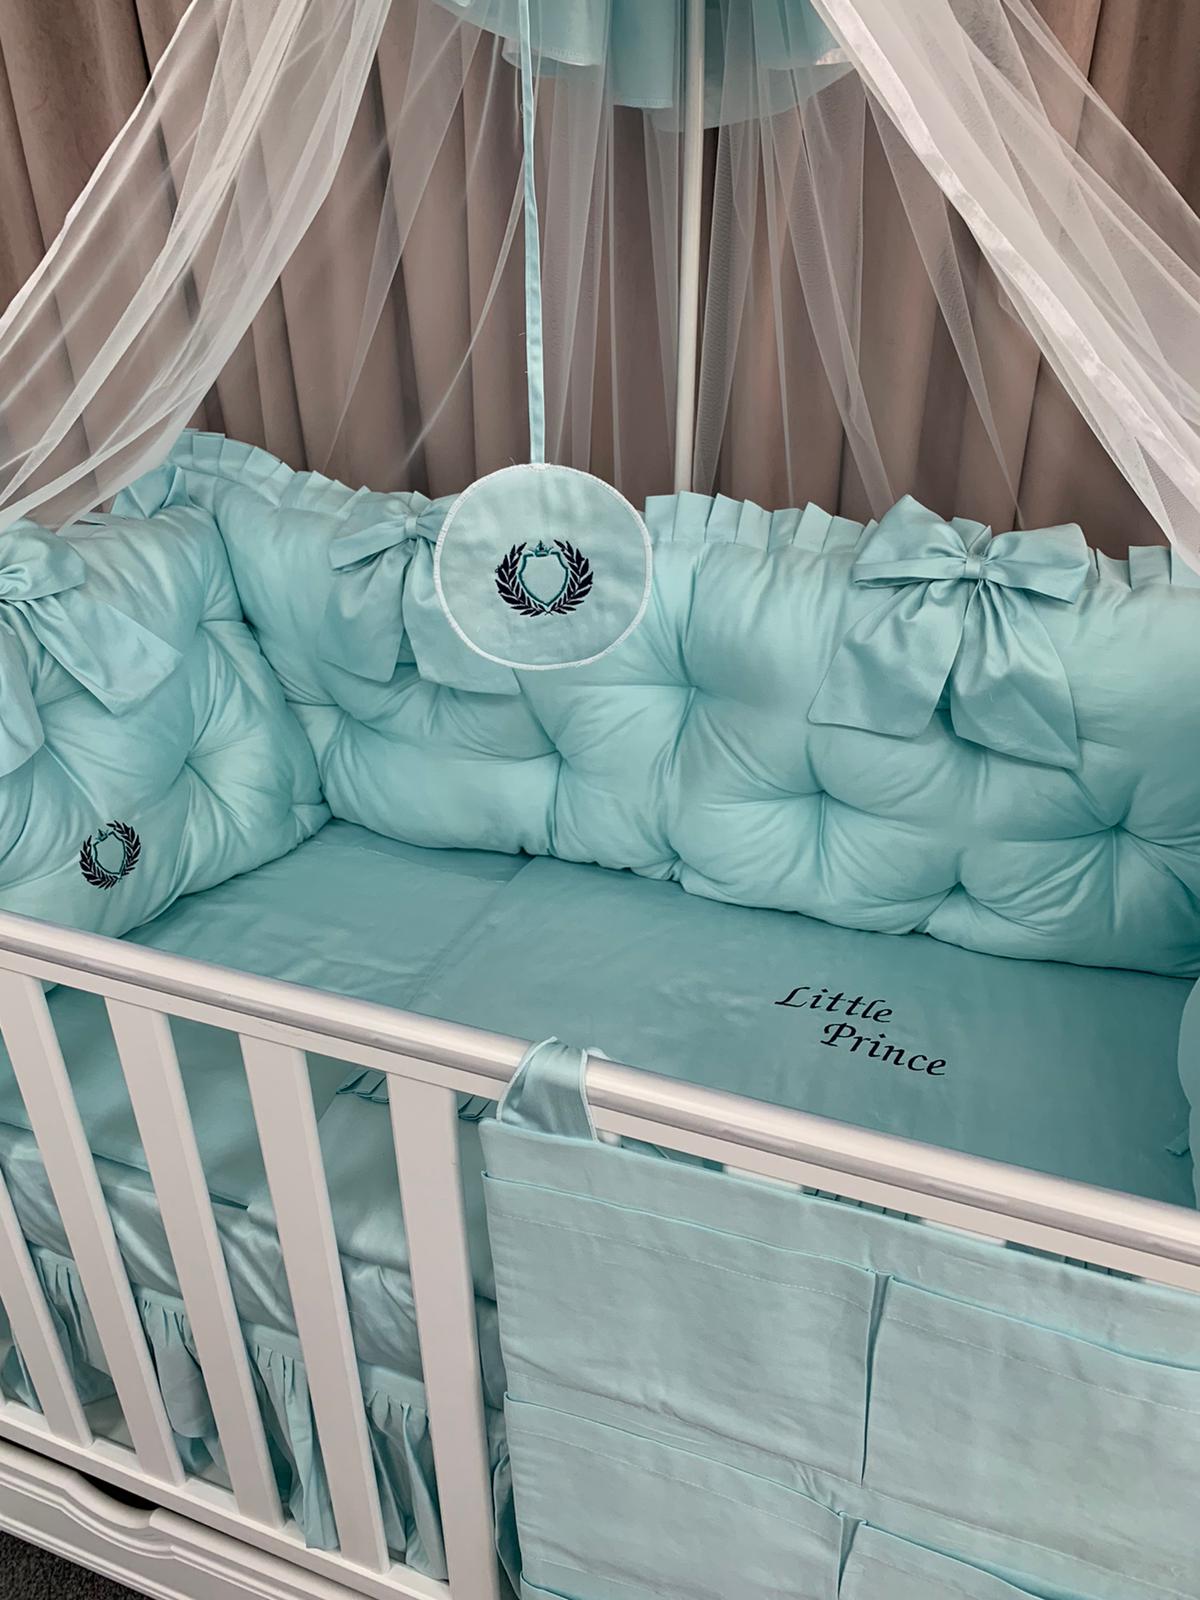 PEPPIbambini ROYAL Mint Little Prince ropa de cama para bebé, 11 ropa de cama, algodón con bordado + mosquitera - KRAUSMAN - Original de Alemania Cochecitos Cochecitos combinados Sistemas